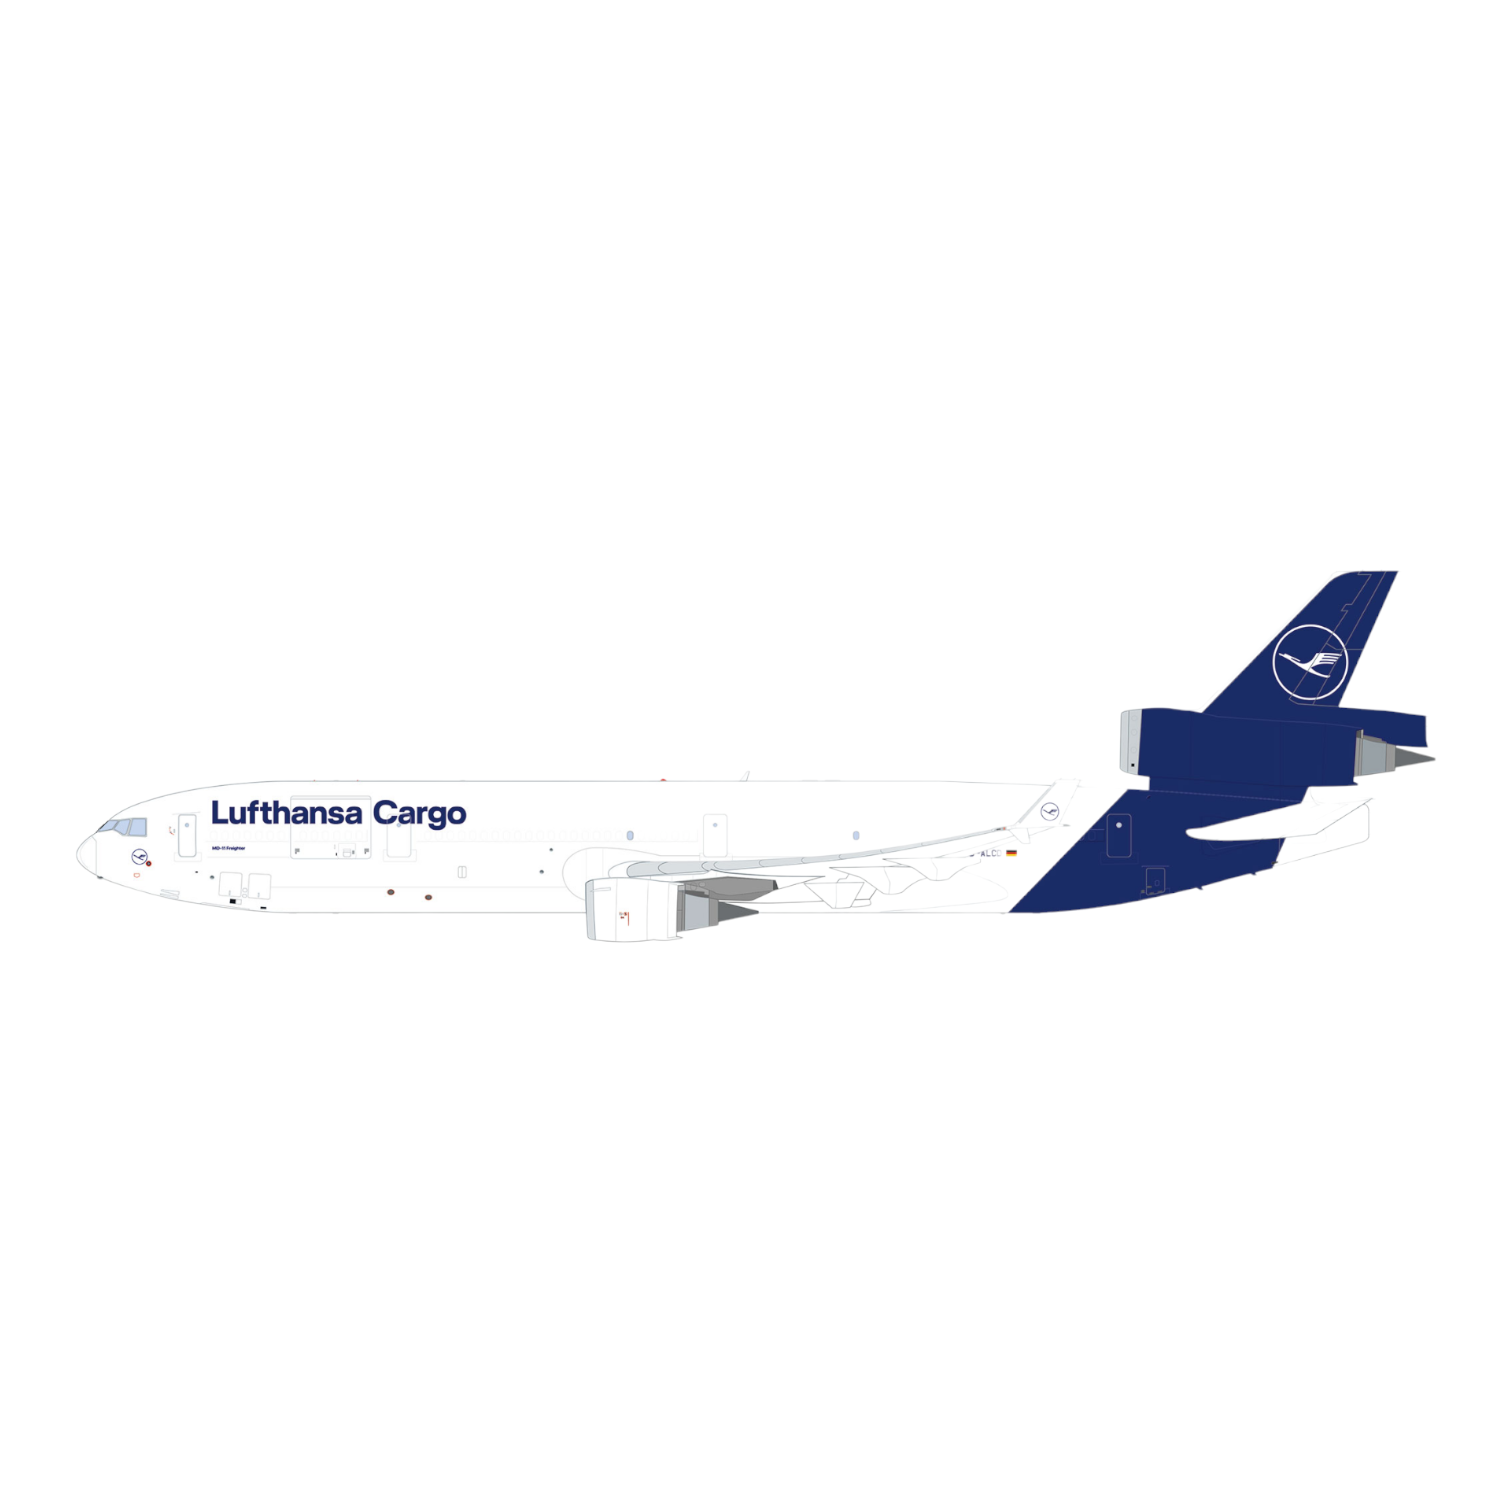 Herpa 613224 McDonnell Douglas MD-11F "Lufthansa Cargo" Modellflugzeug 1:200